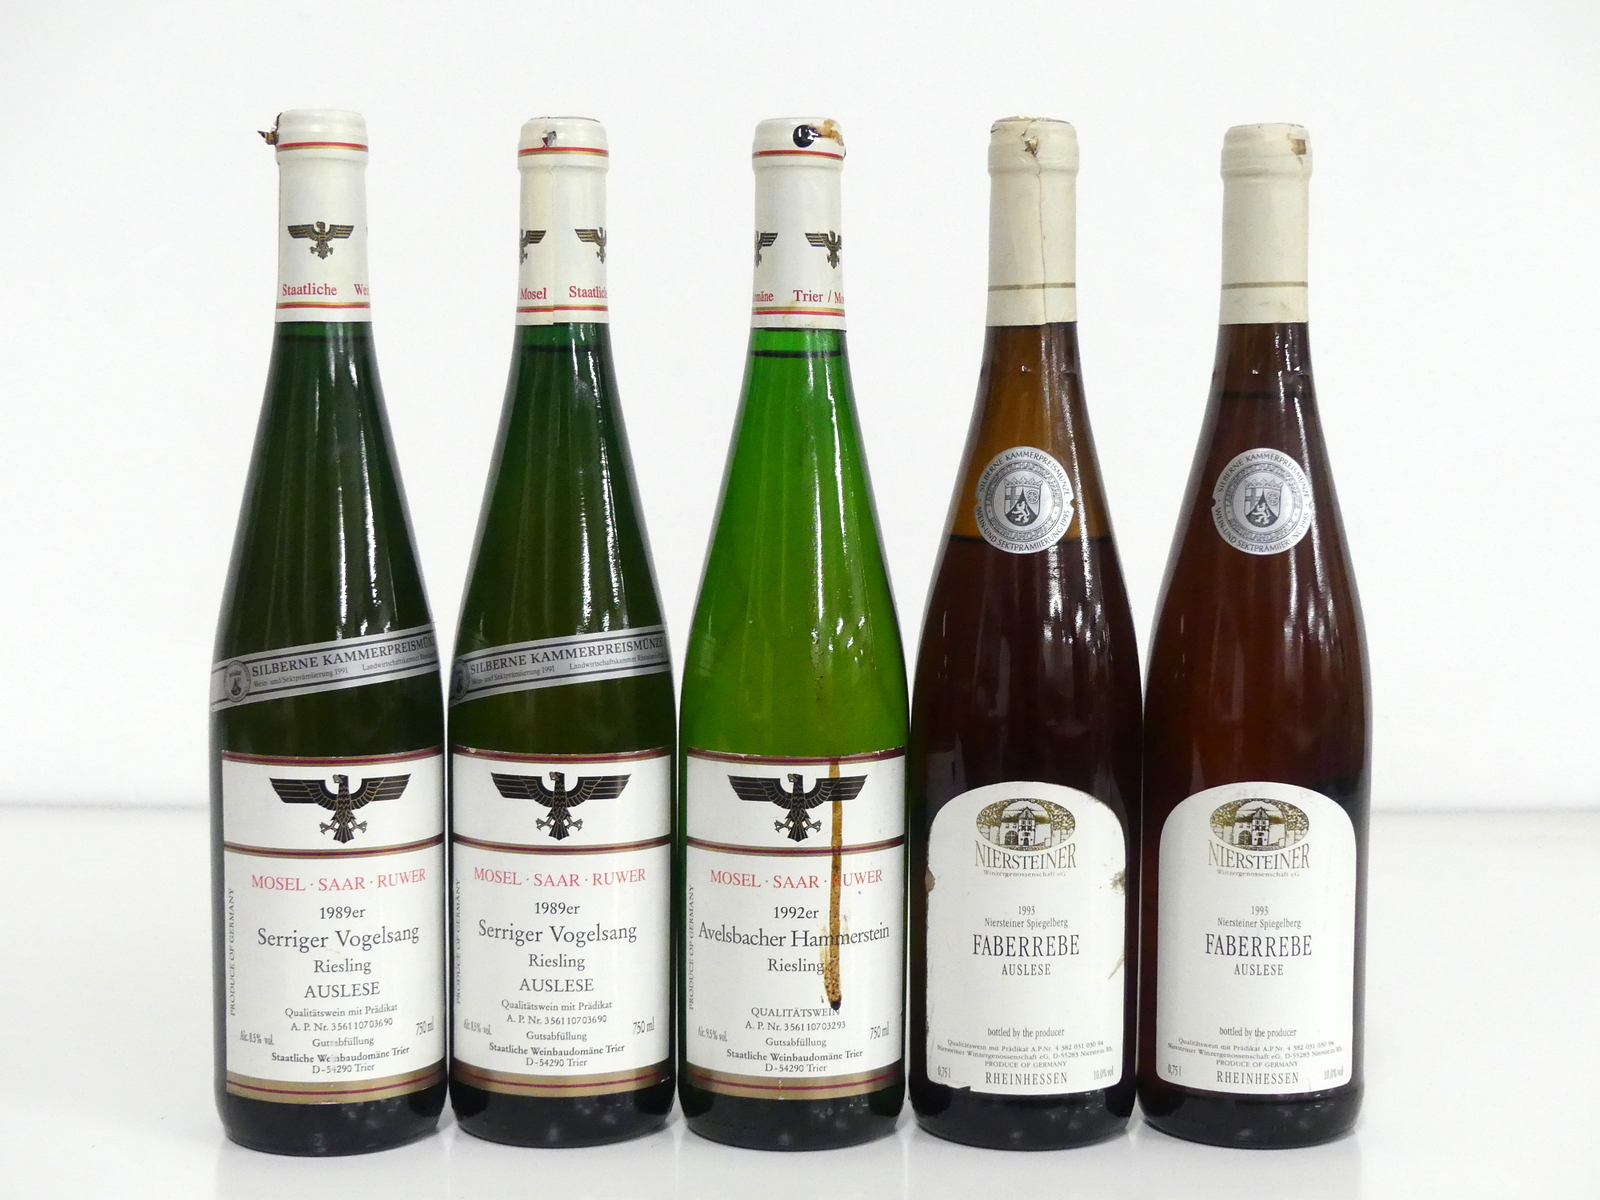 2 bts Staatliche Weinbaudomaine Trier Serriger Volgelsang Riesling Auslese 1989 1 bt